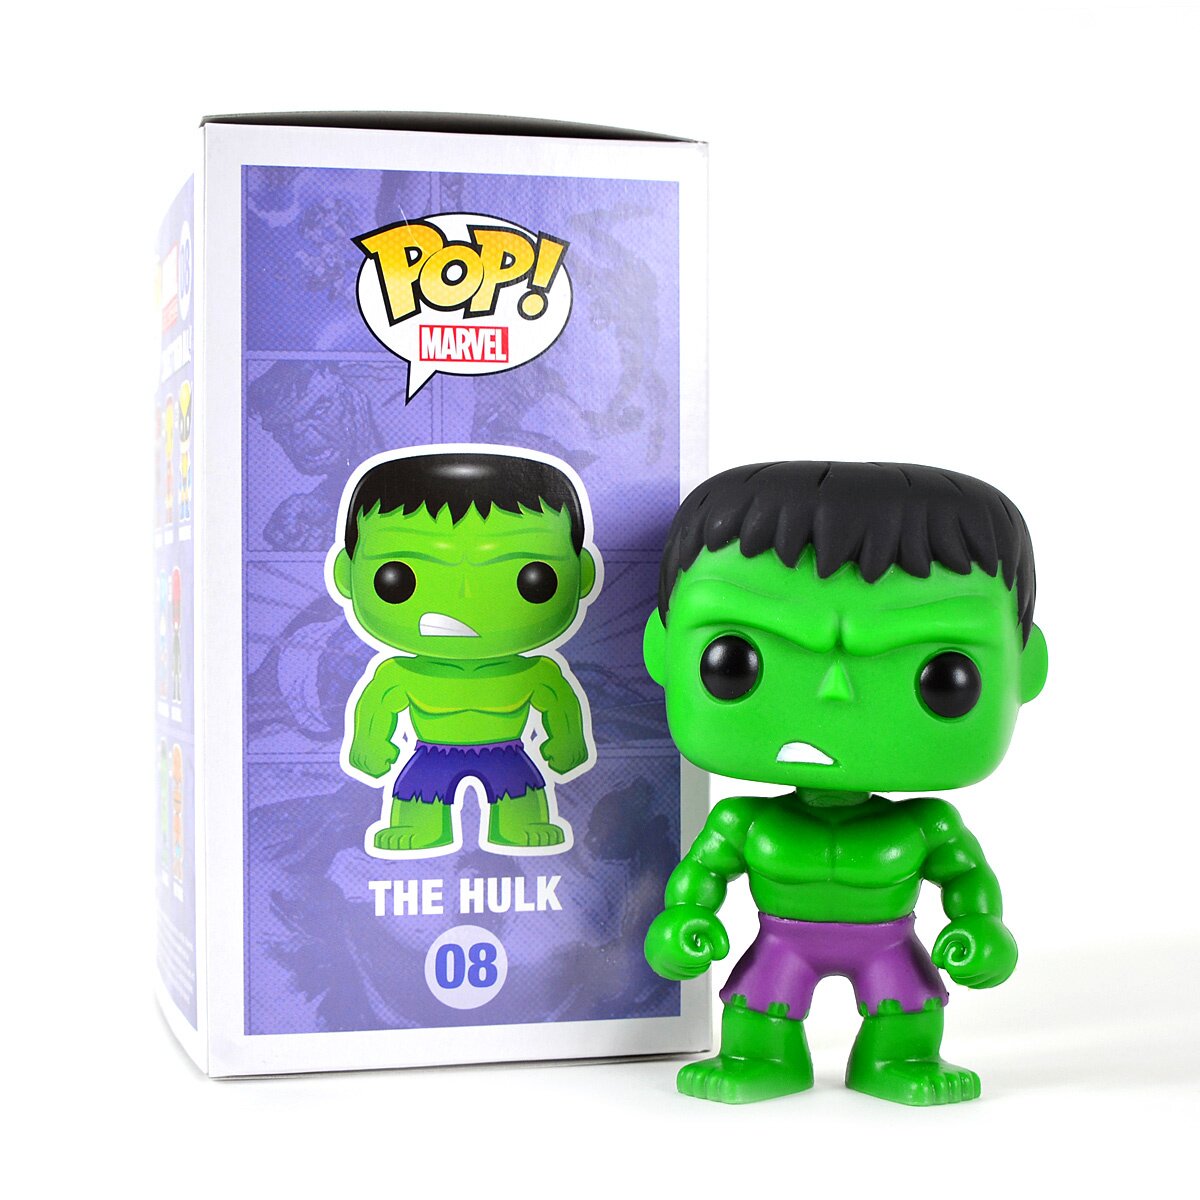 The Hulk Funko Pop! Marvel #08